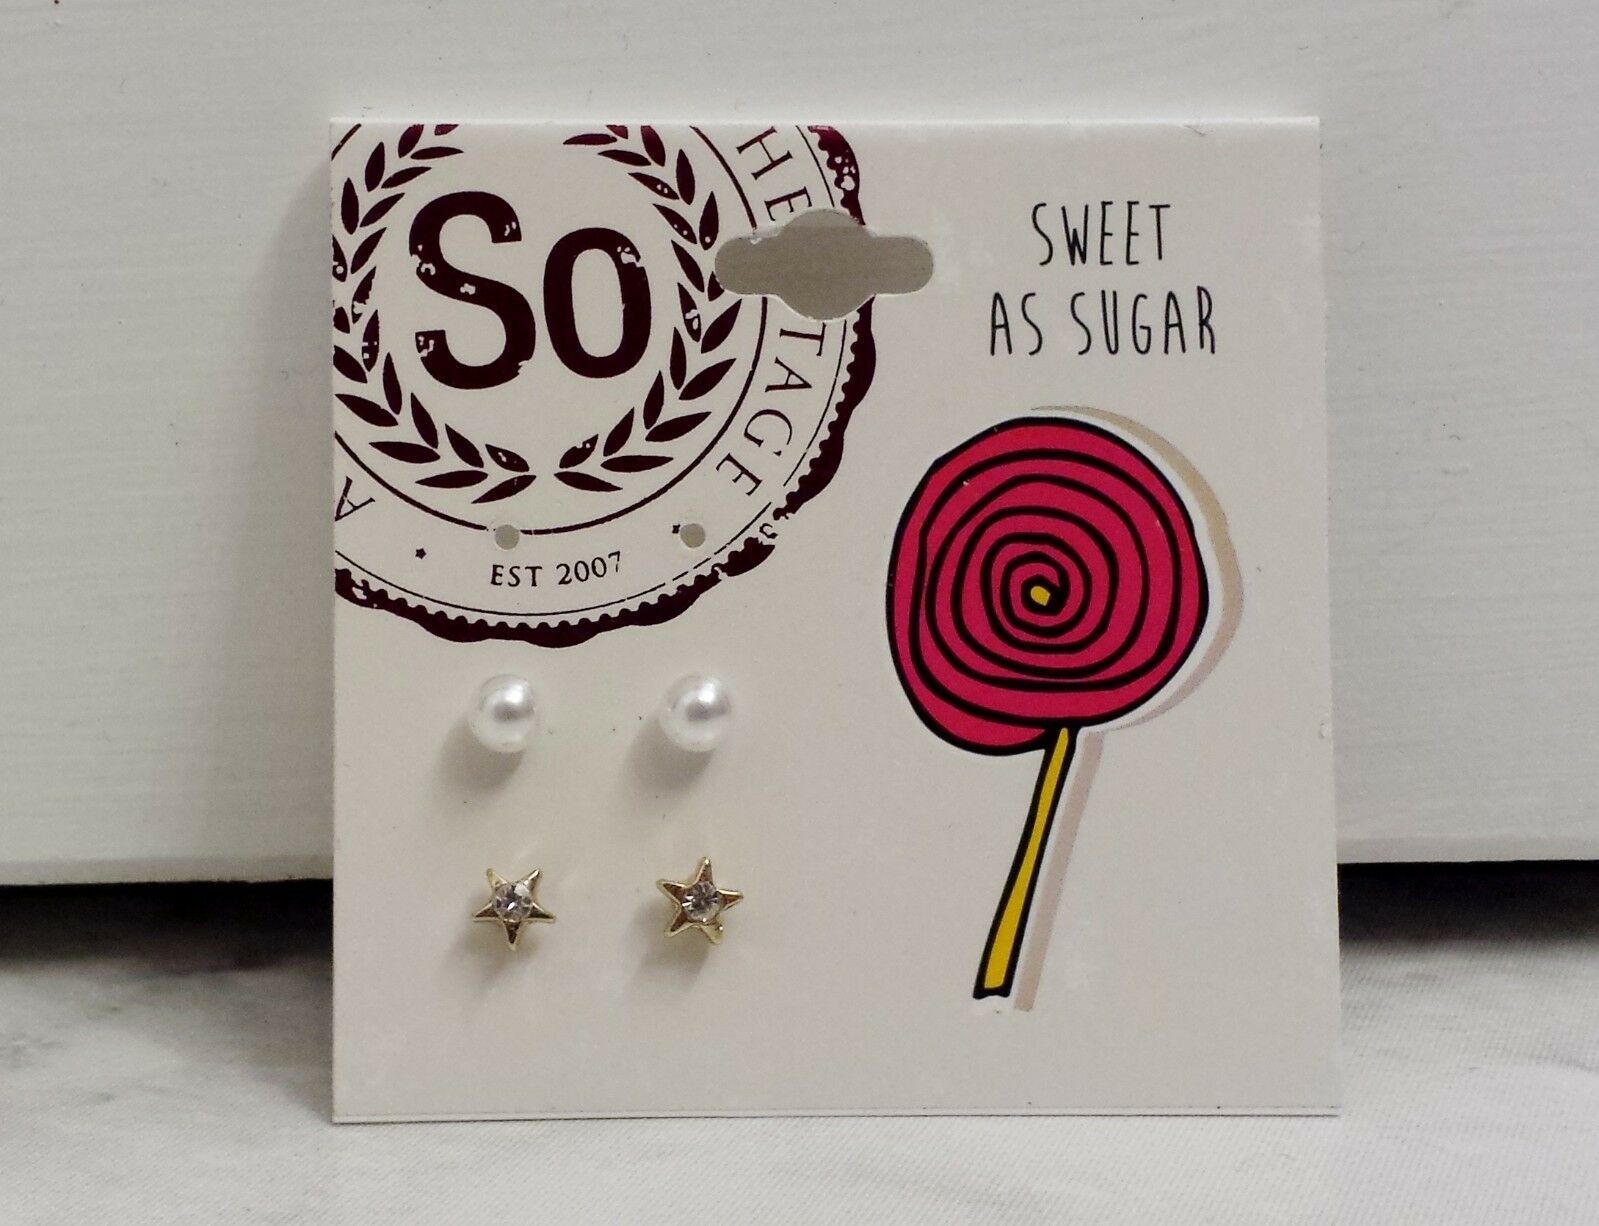 SO Sweet As Sugar Pair Of Pearl and Gold Tone Star Rhinestone Stud Earrings Set - $4.99